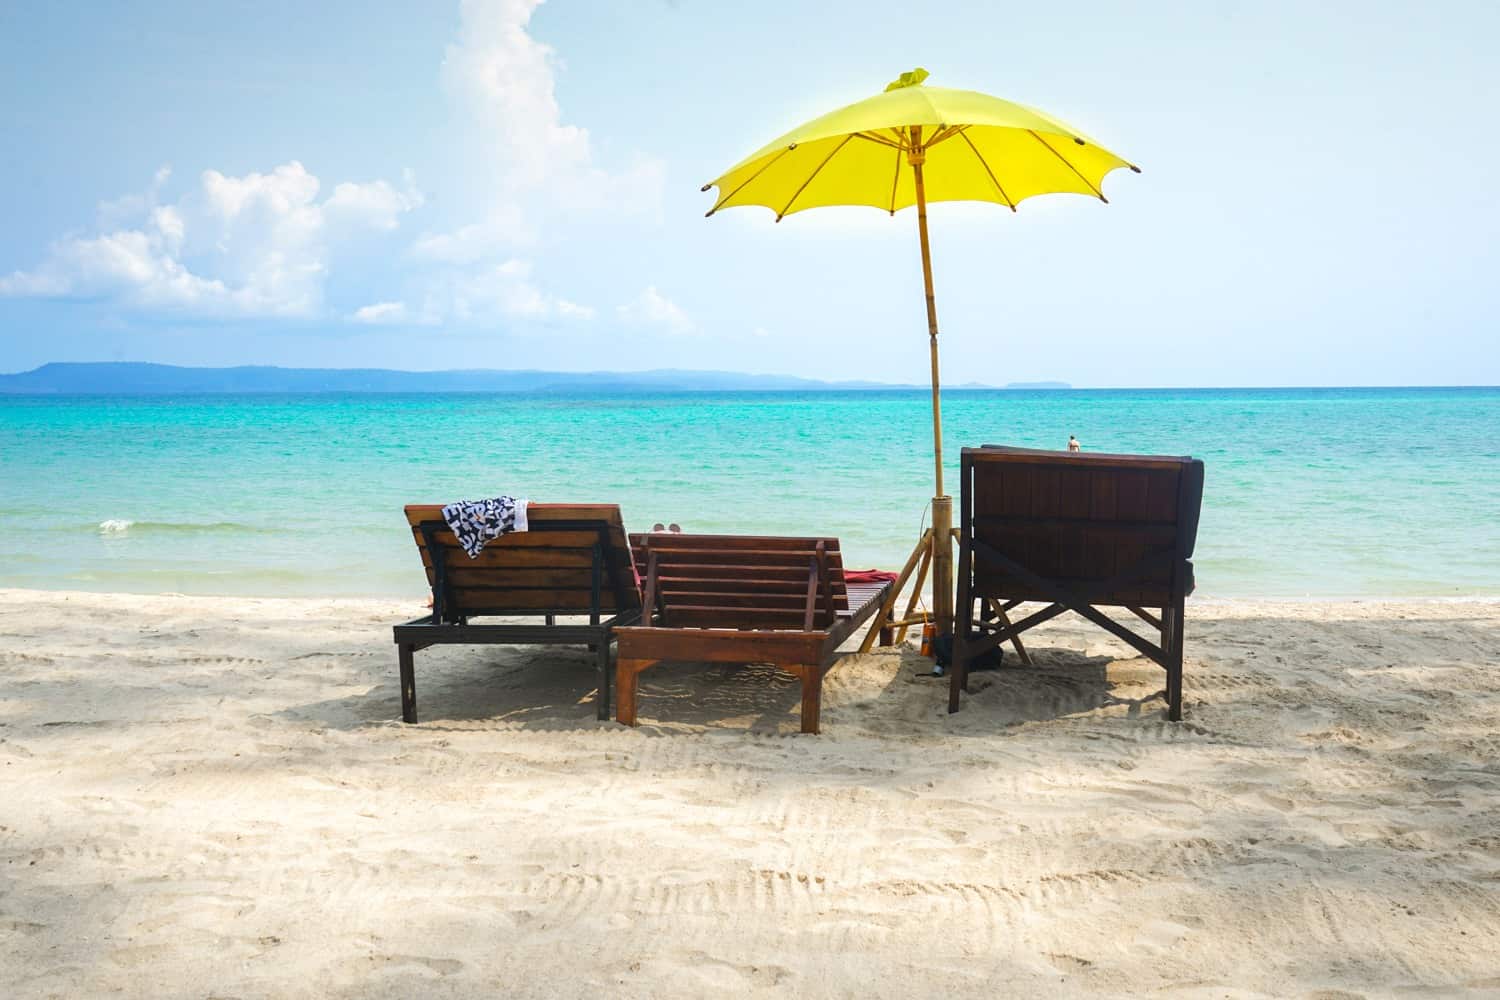 Deckchairs on Thai beach with yellow umbrella